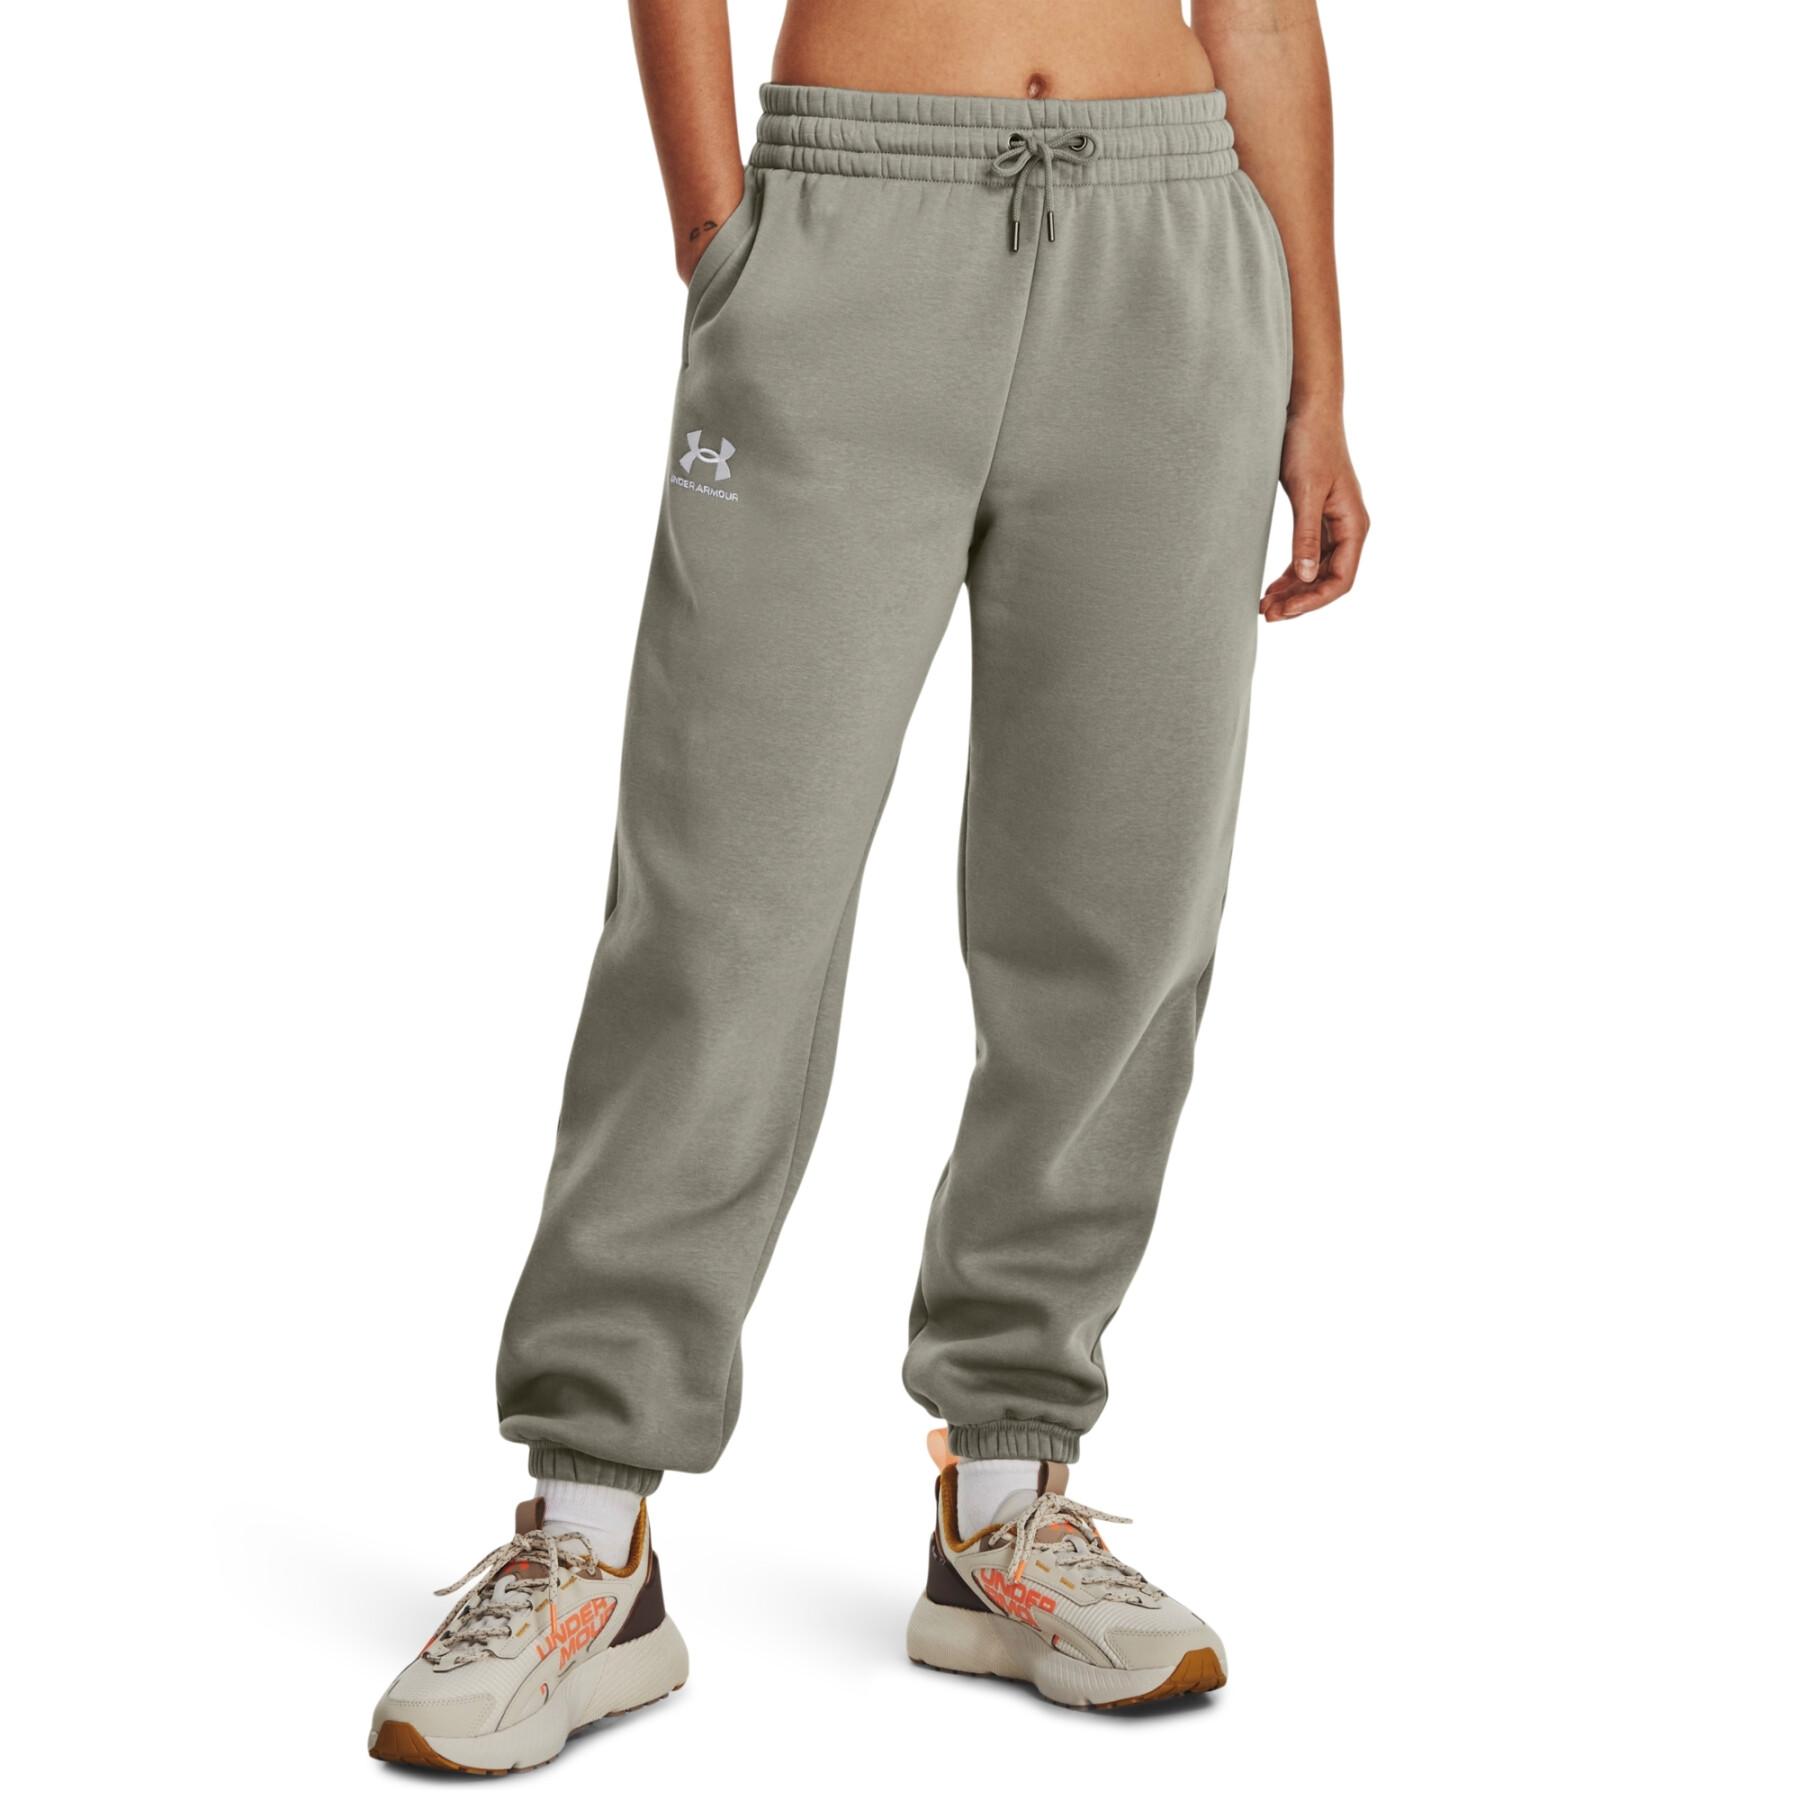 Women's jogging suit Under Armour Essential Fleece - Pants / Jogging suits  - The Stockings - Womens Clothing